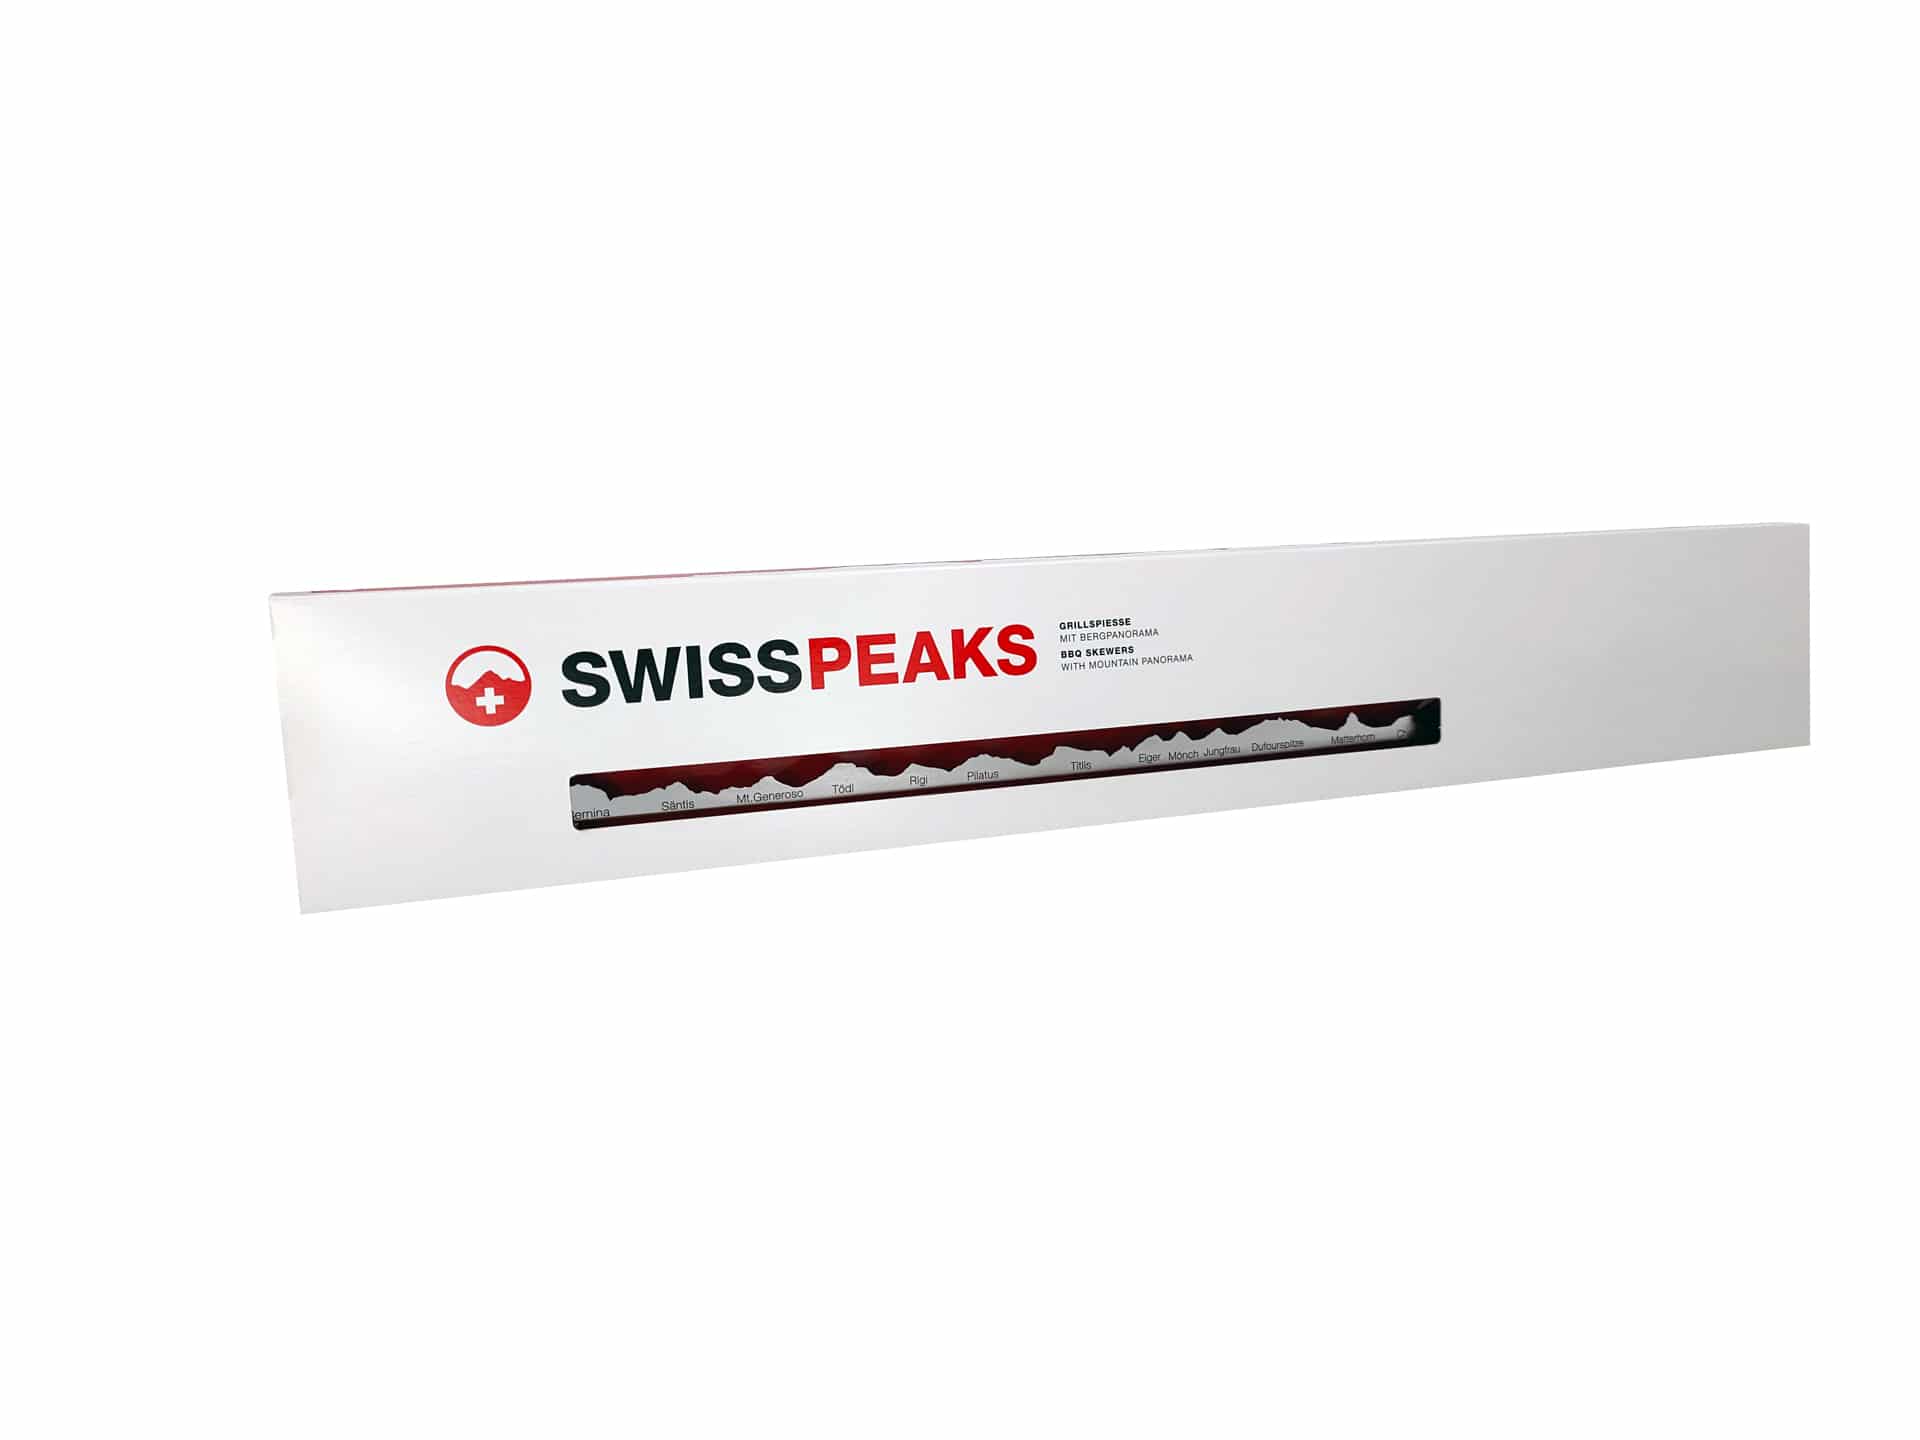 Grillspiess Swiss Alps Edition